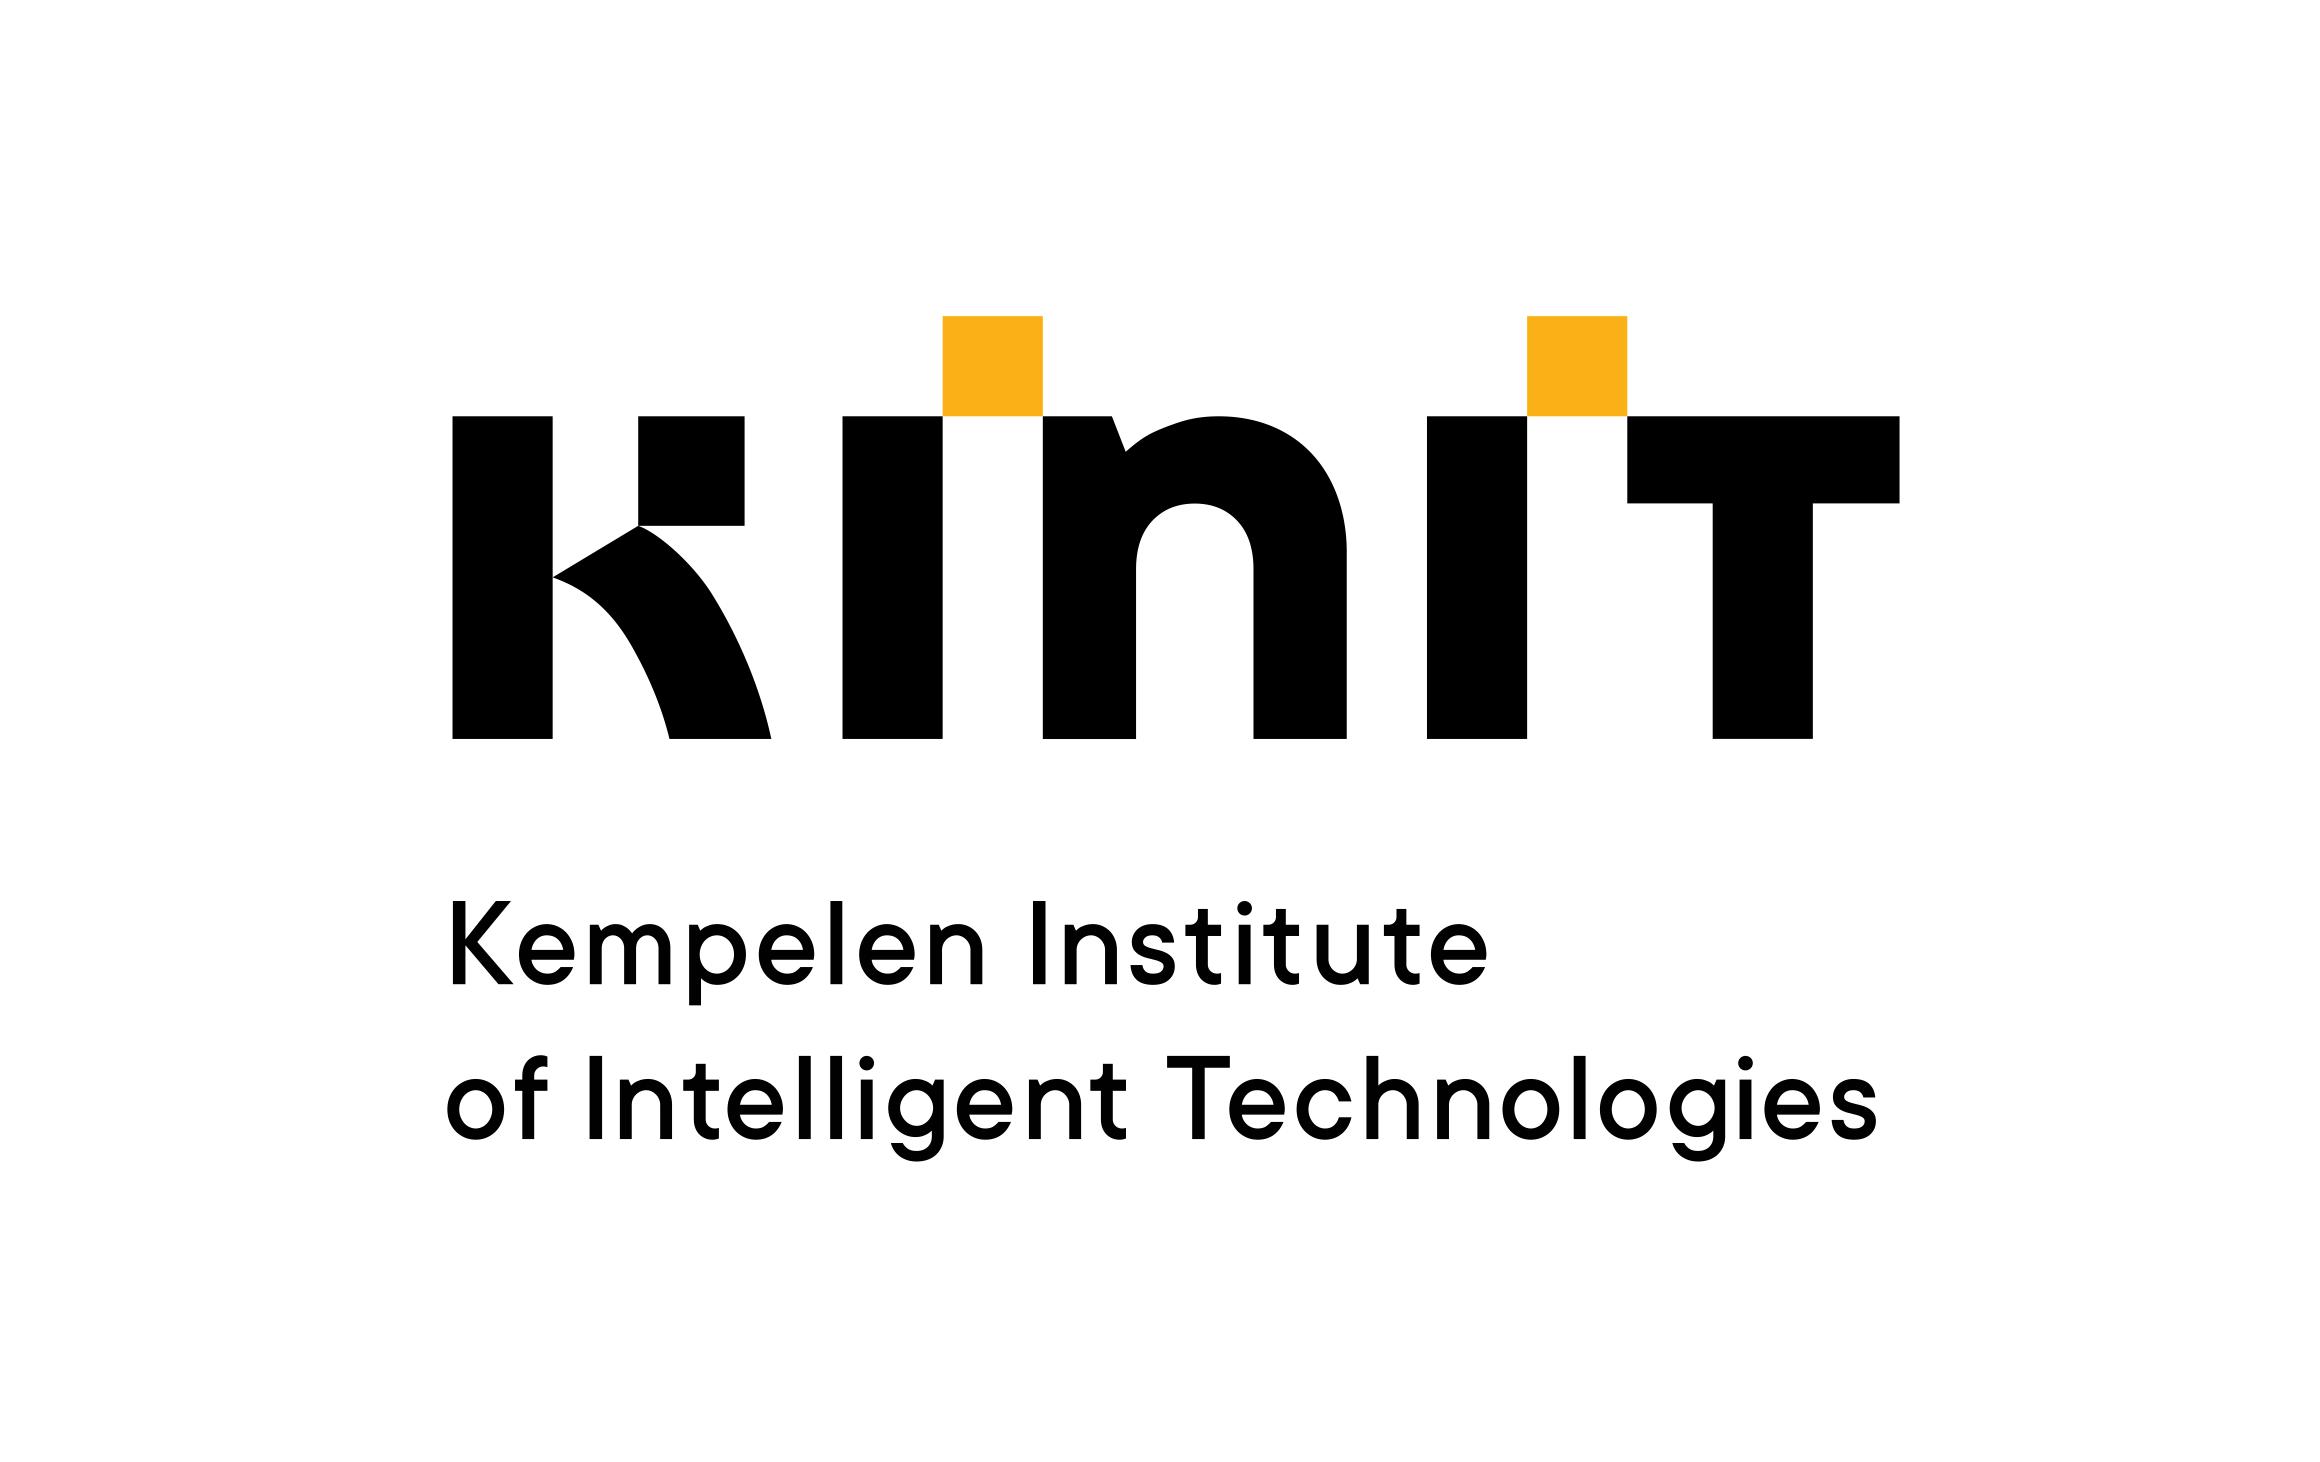 Kempelen Institute of Intelligent Technologies